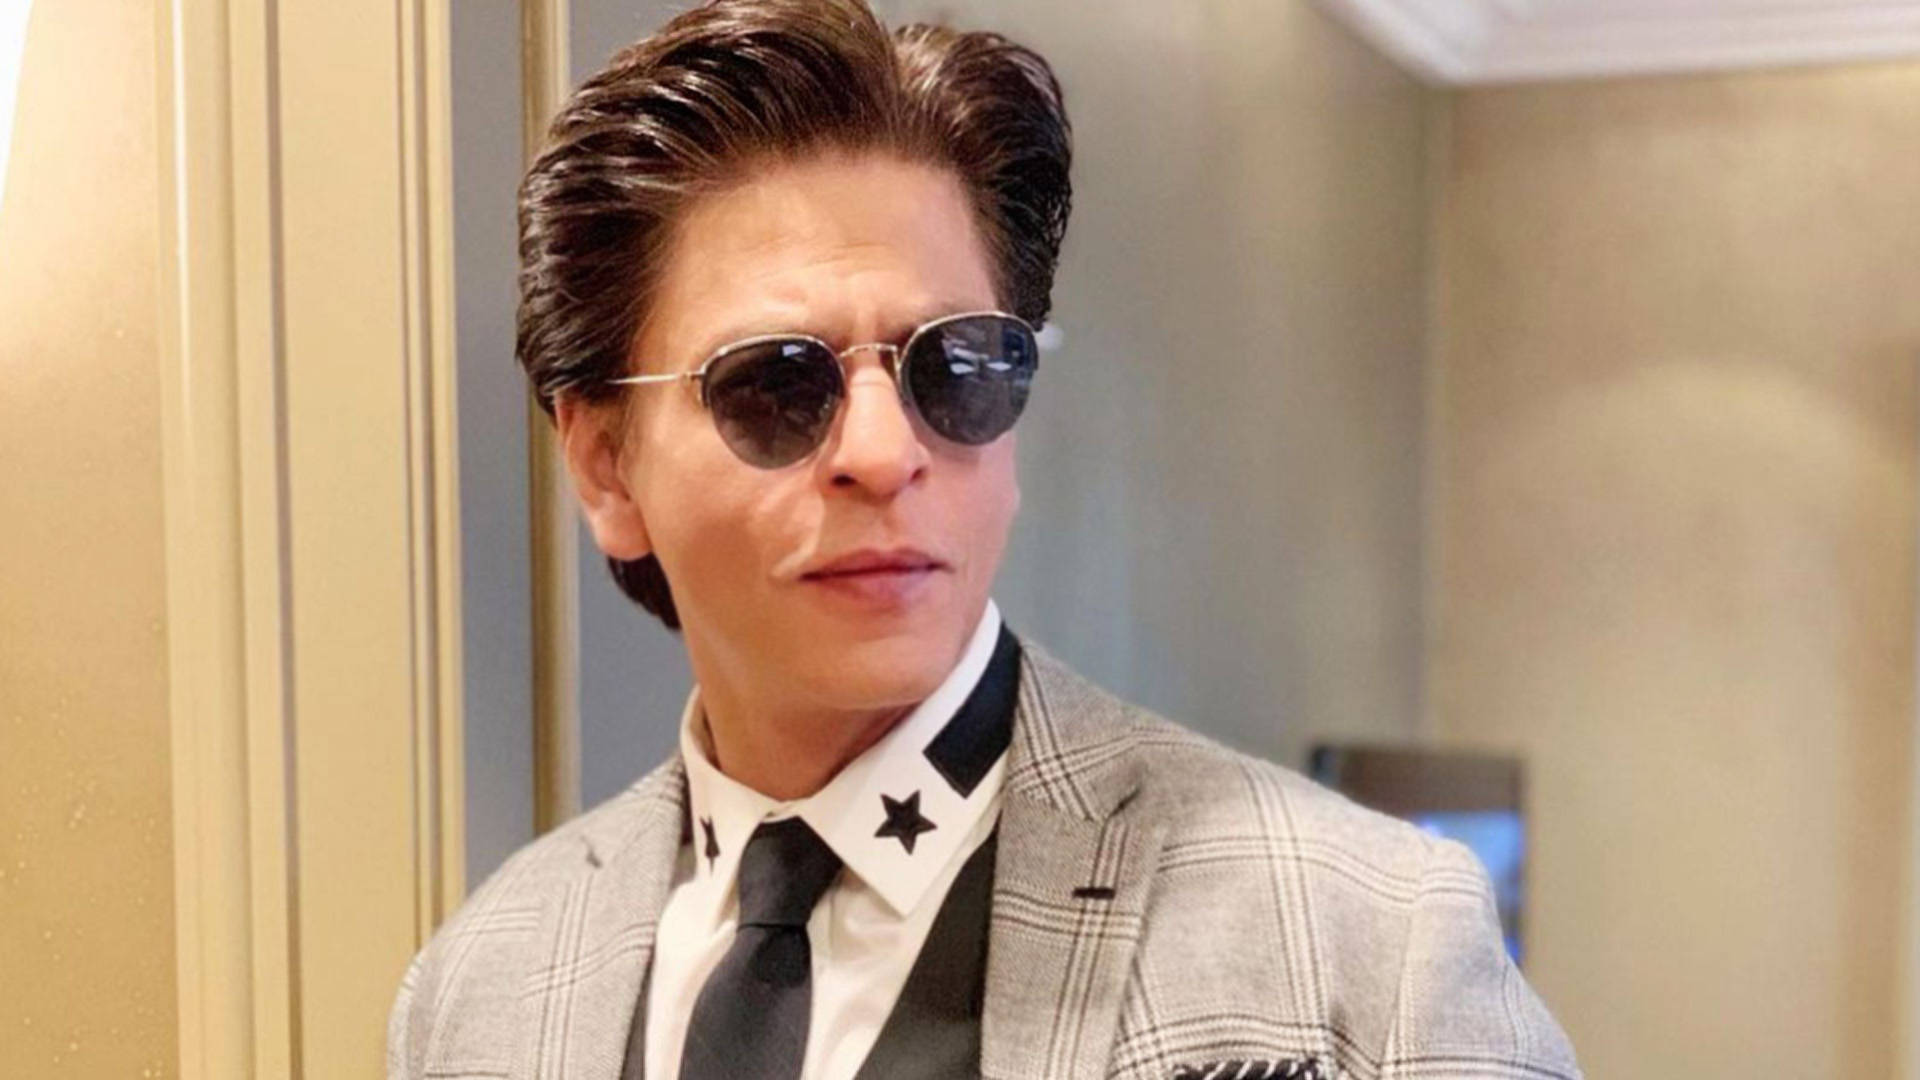 Shah Rukh Khan Plaid Suit Wallpaper